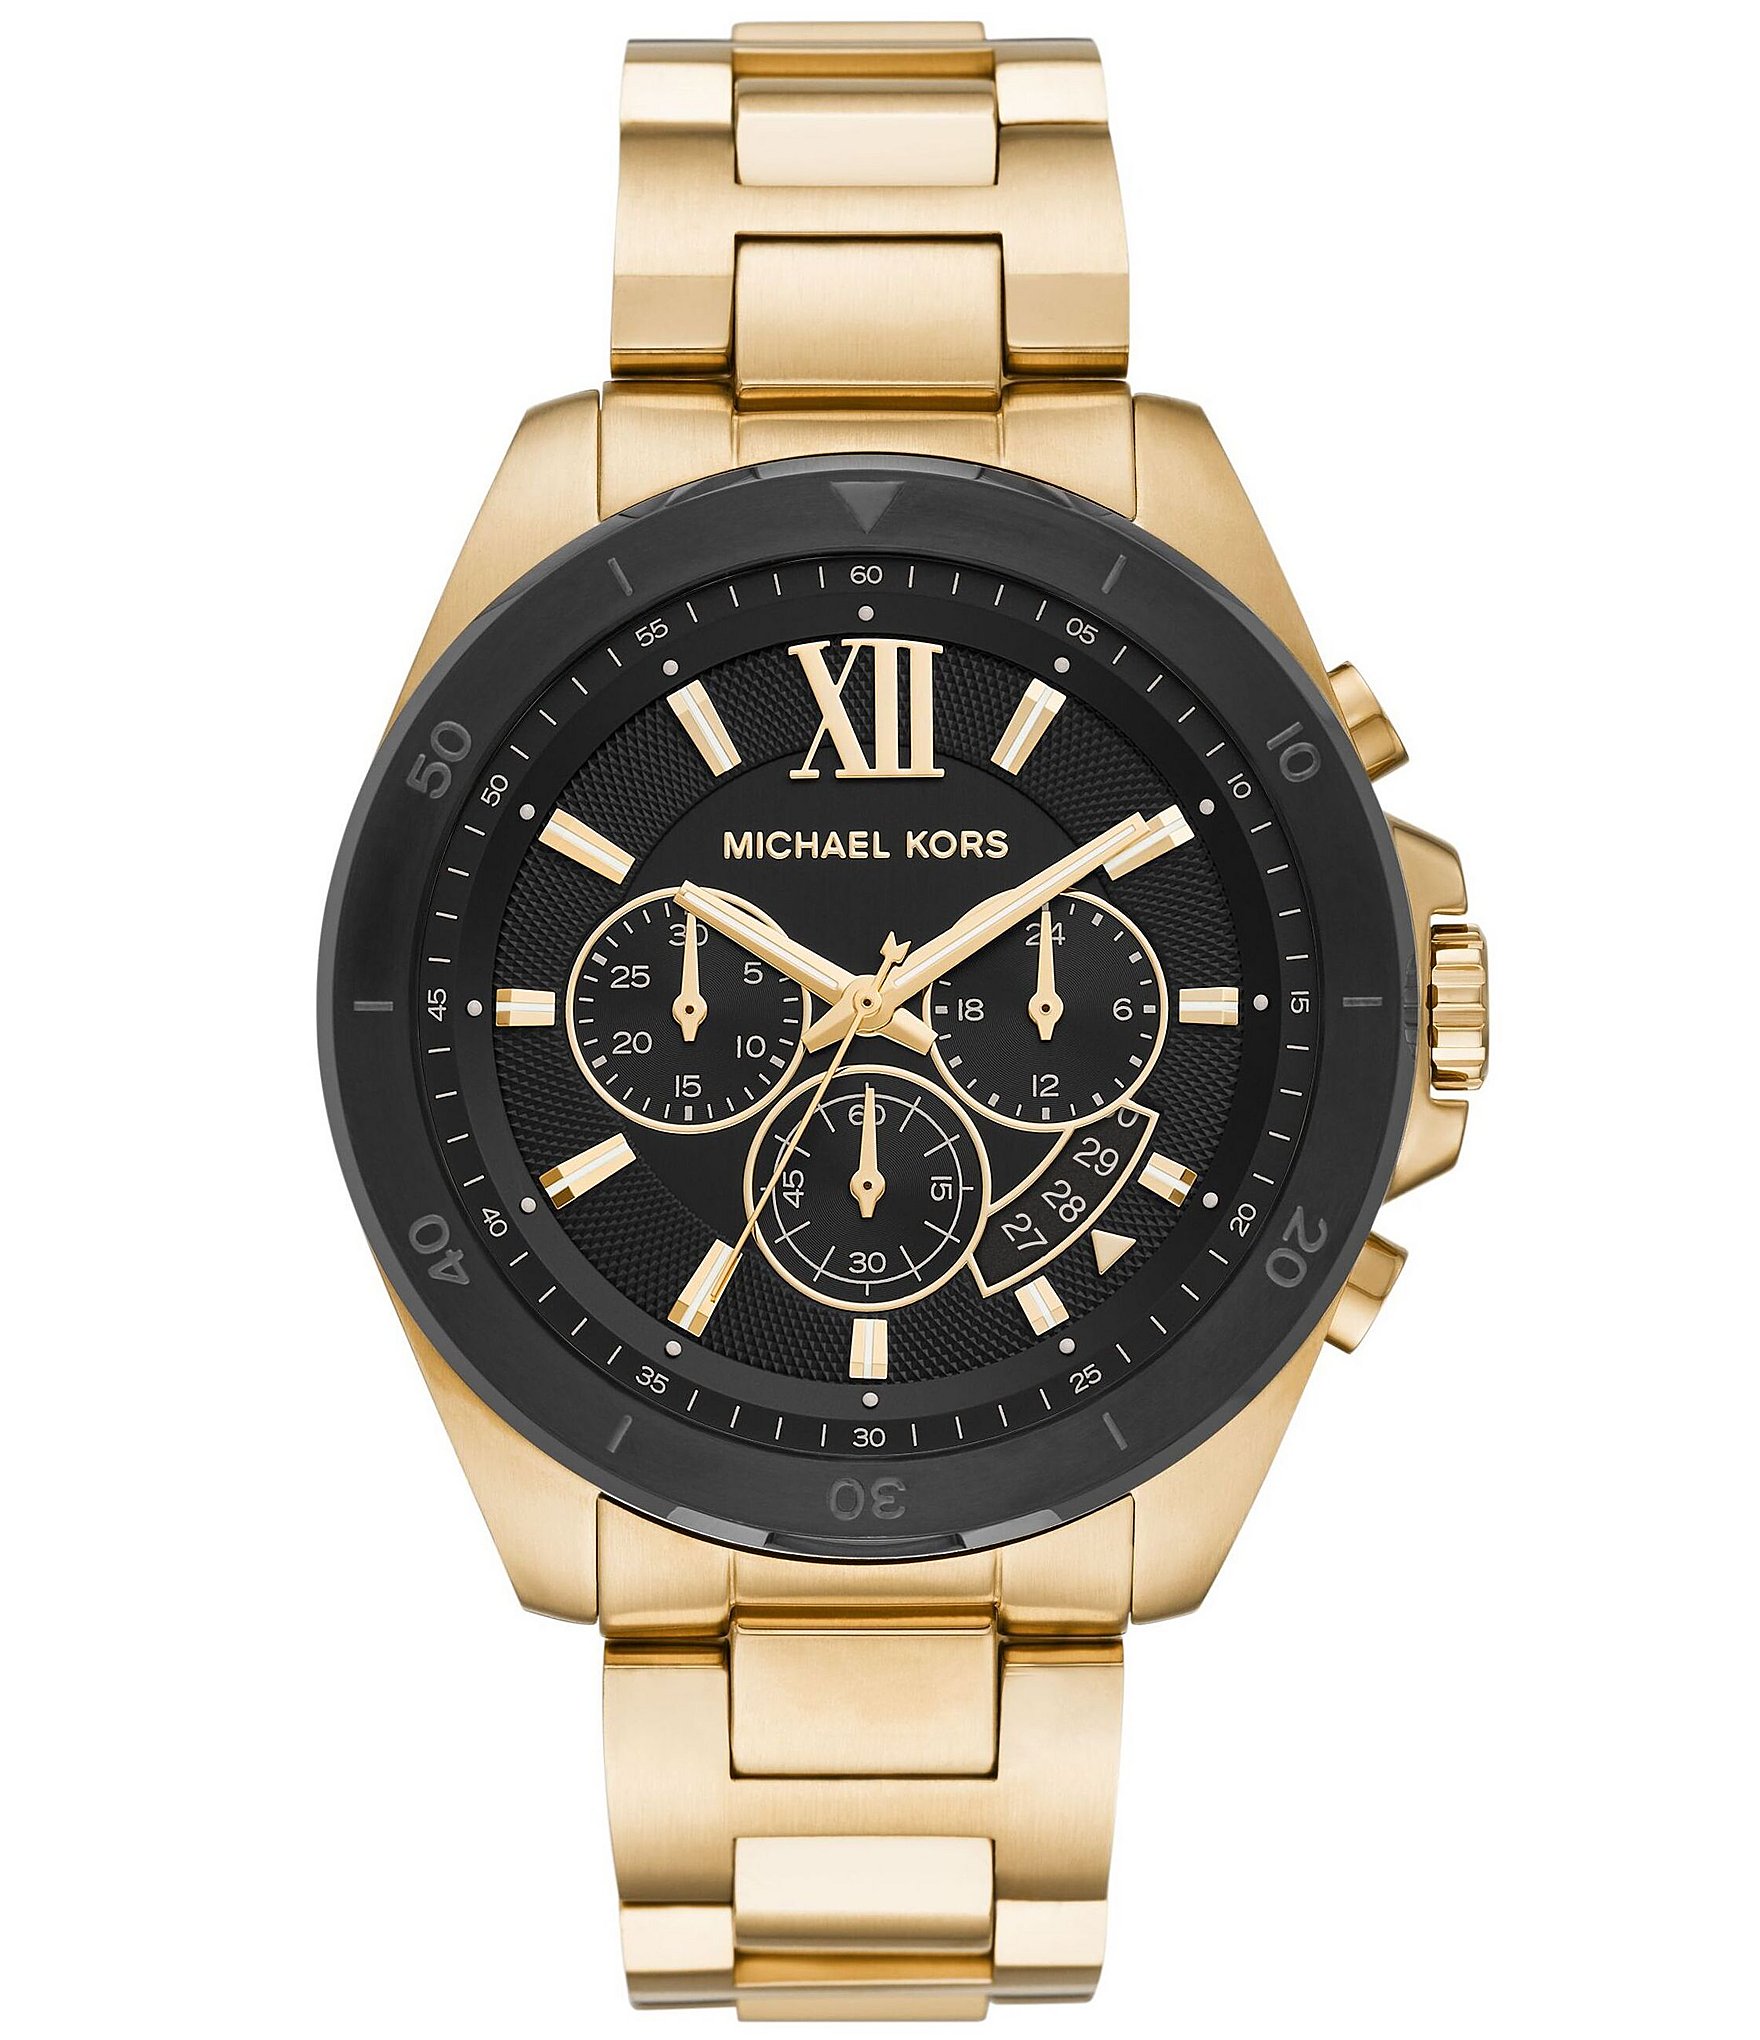 Manifold I donor Michael Kors Brecken Chronograph Gold-Tone Stainless Steel Bracelet Watch |  Dillard's